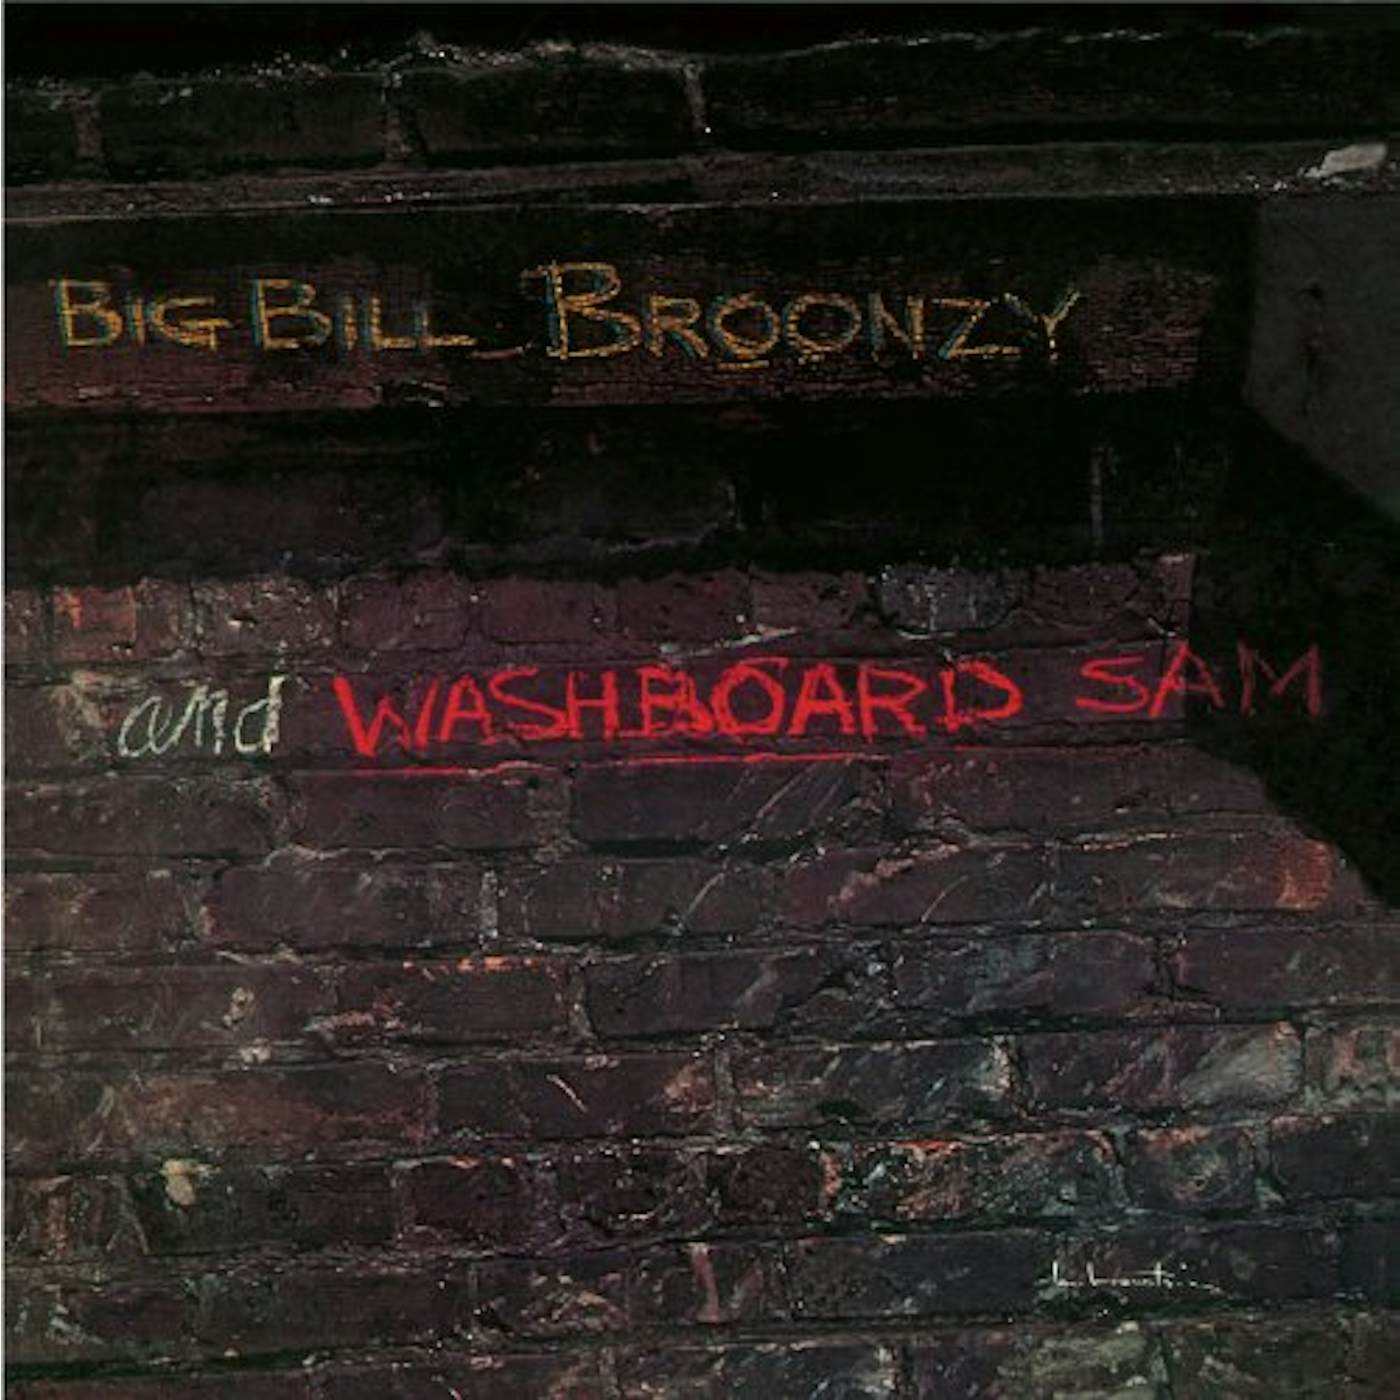 Big Bill Broonzy & Washboard Sam Big Bill Broonzy And Washboard Sam Vinyl Record